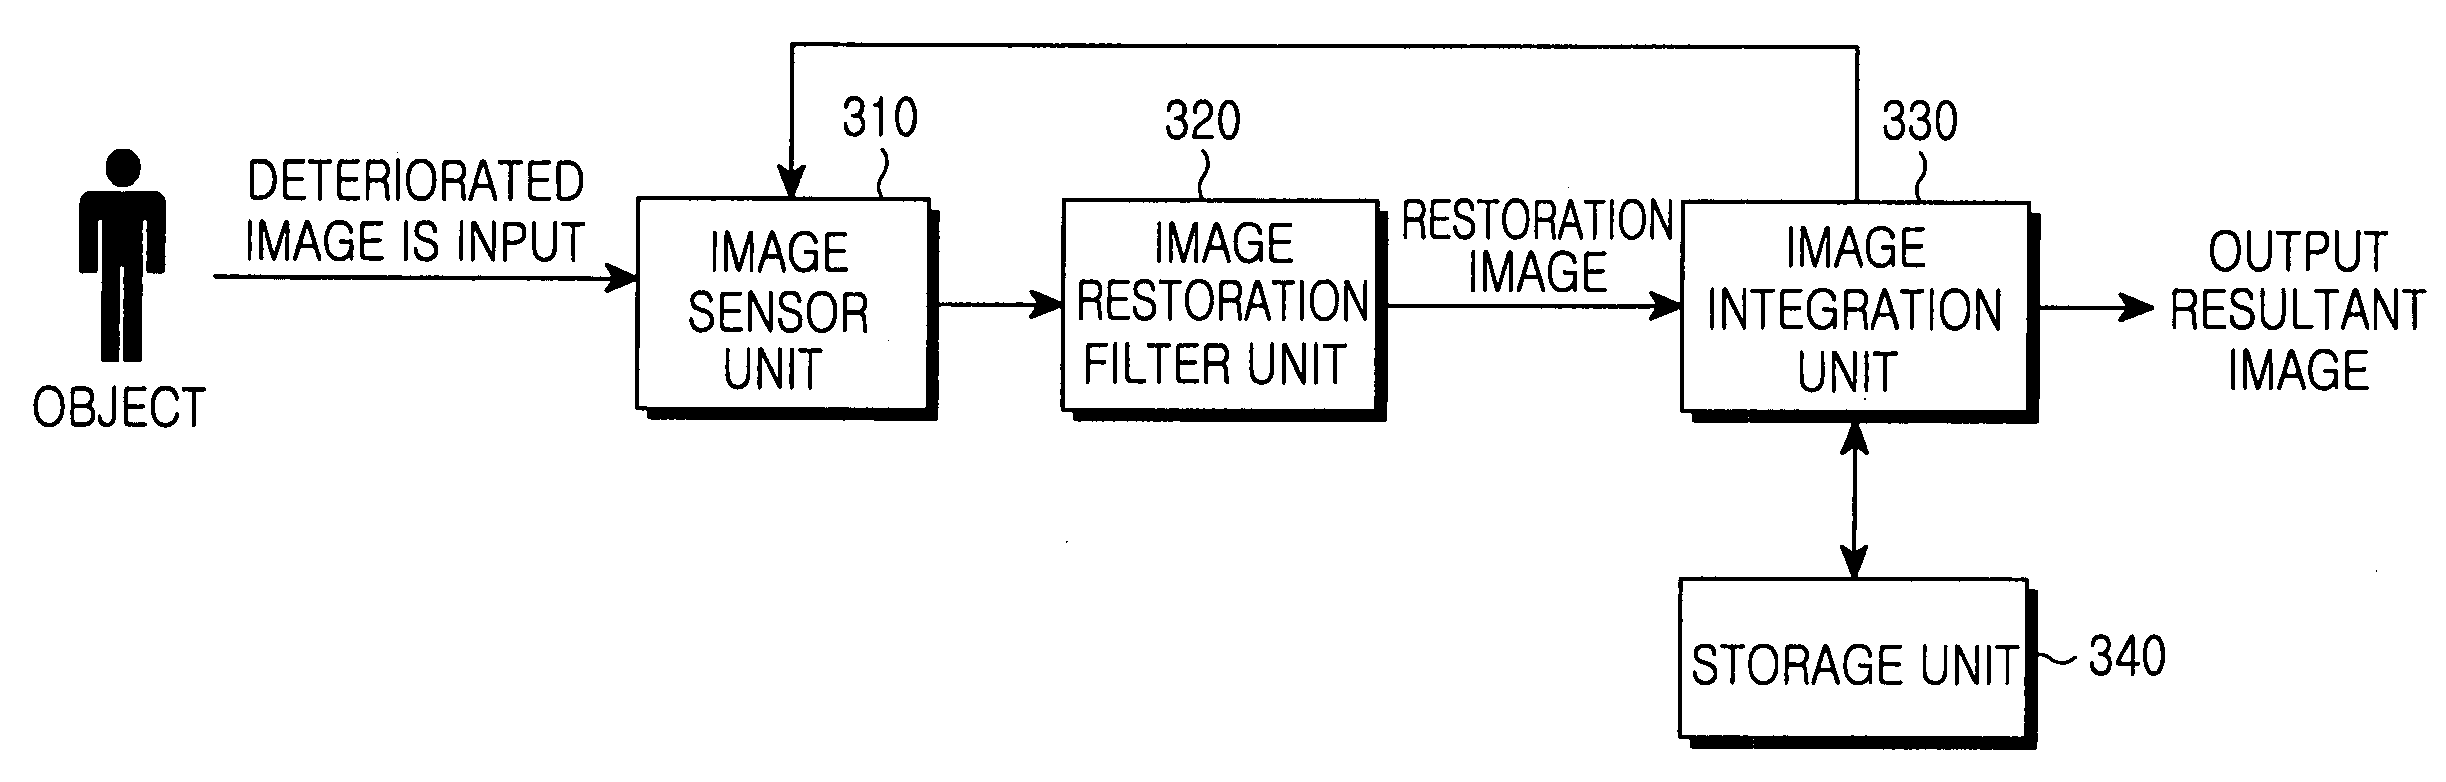 Method and apparatus for multifocus digital image restoration using image integration technology